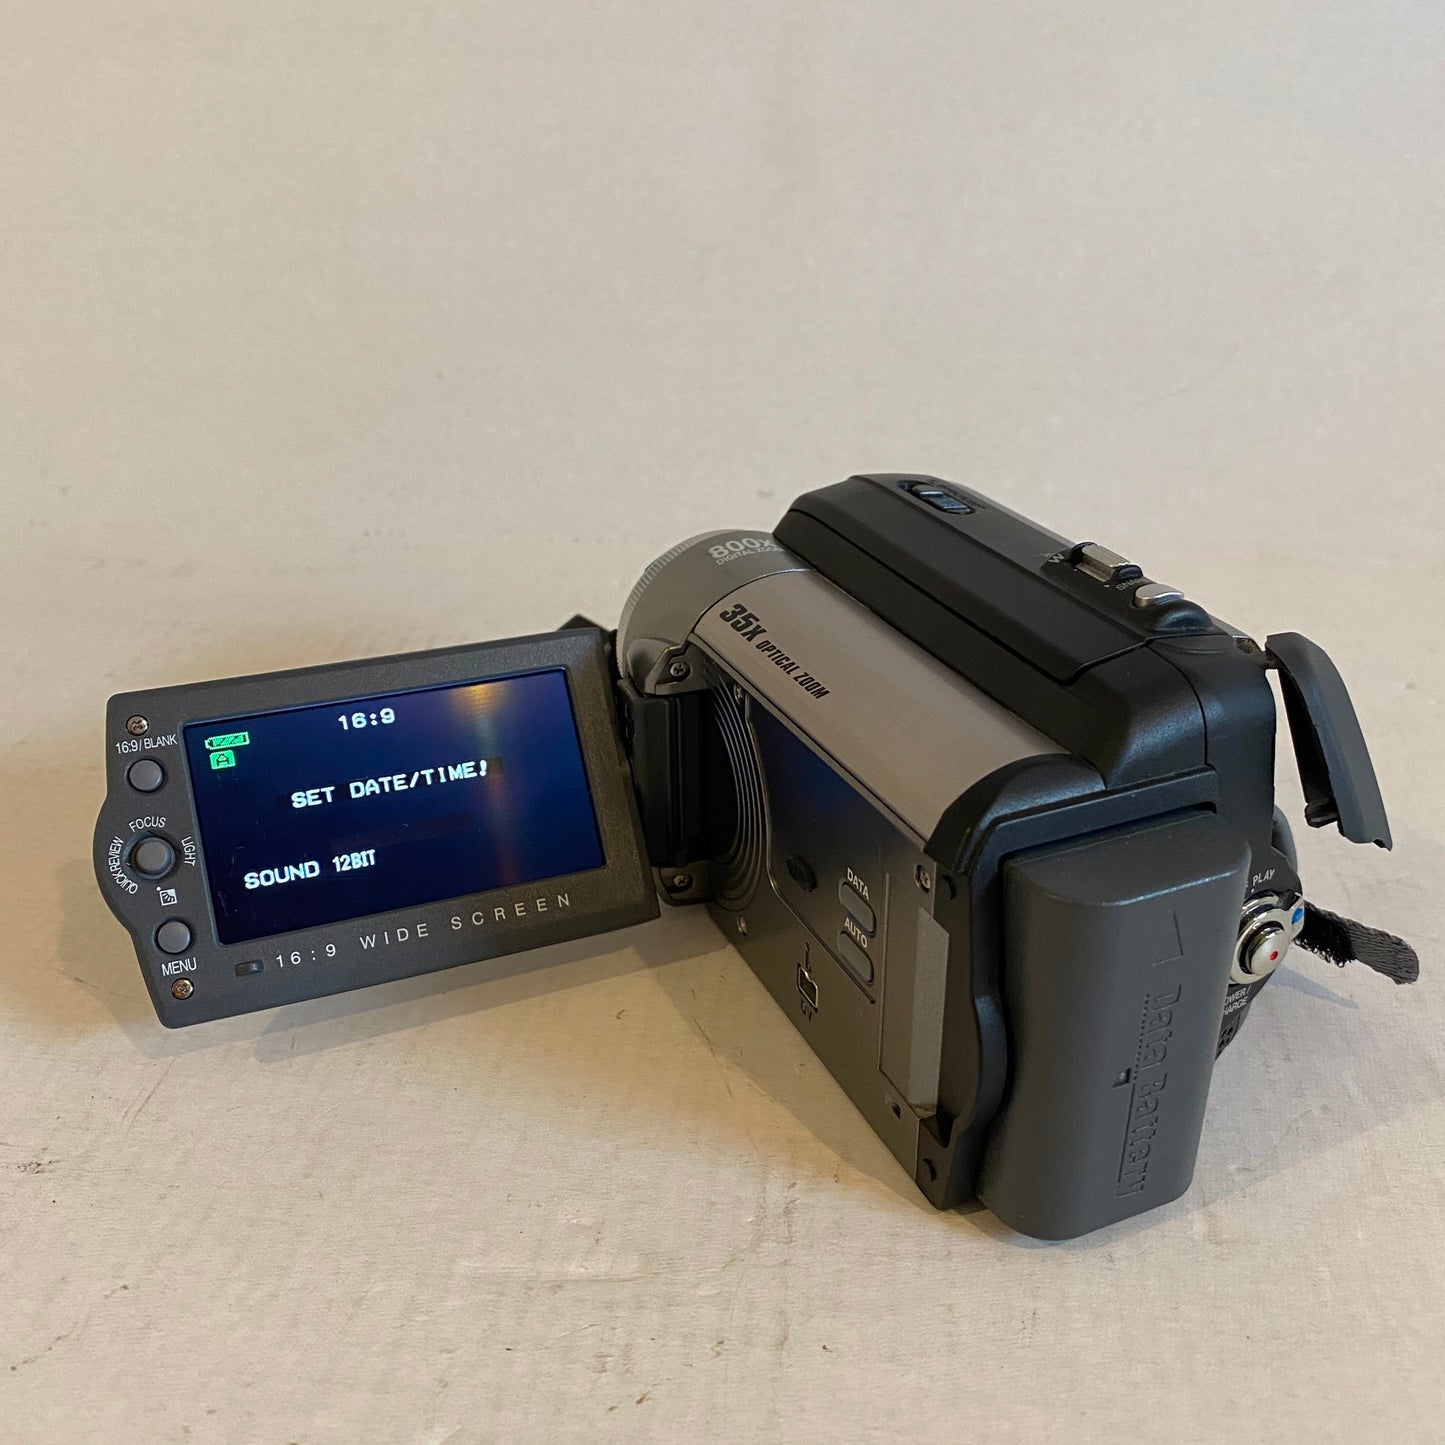 JVC MiniDV Digital Video Camcorder - GR-D850U